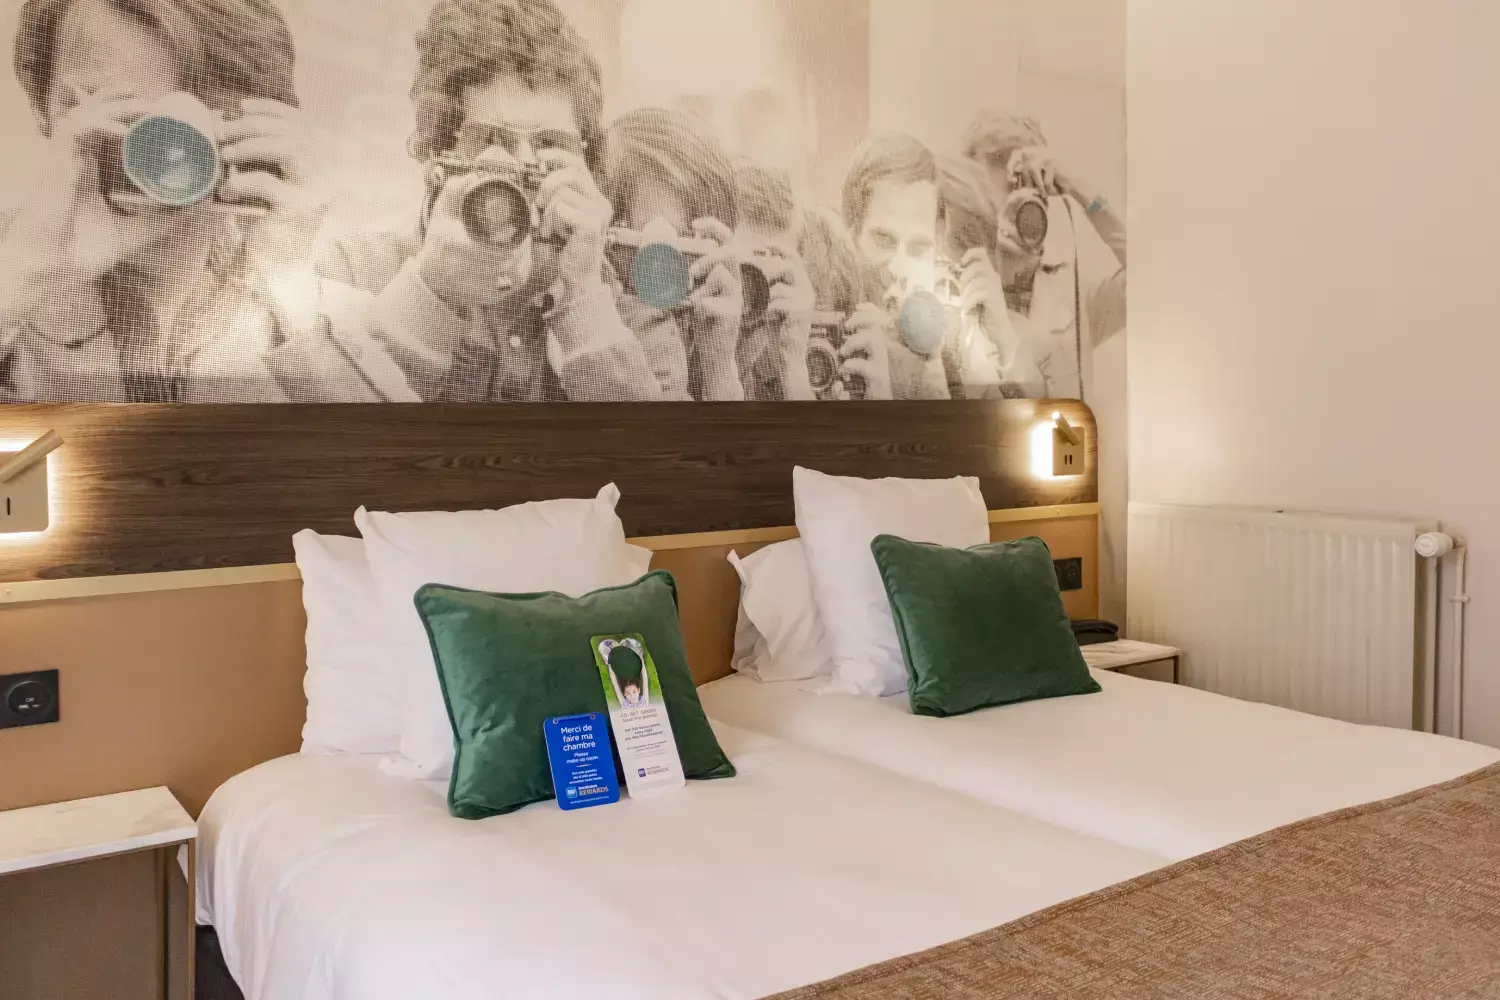 Comfort Room | Best Western Plus L'Artist Hôtel in the centre of Tours